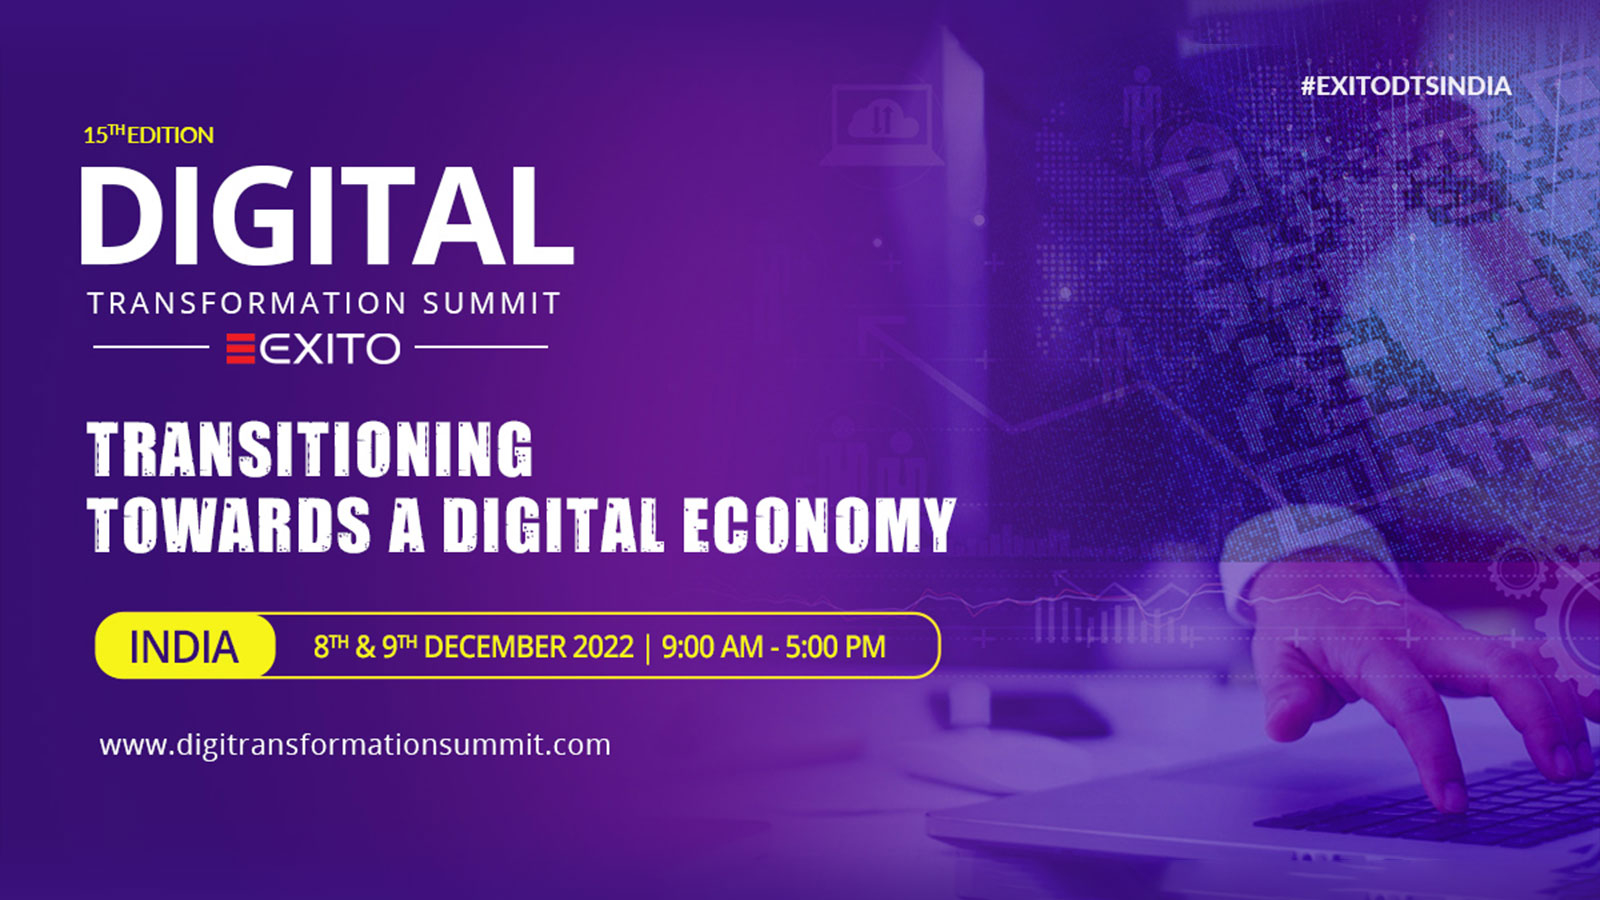 15th Edition of Digital Transformation Summit: India